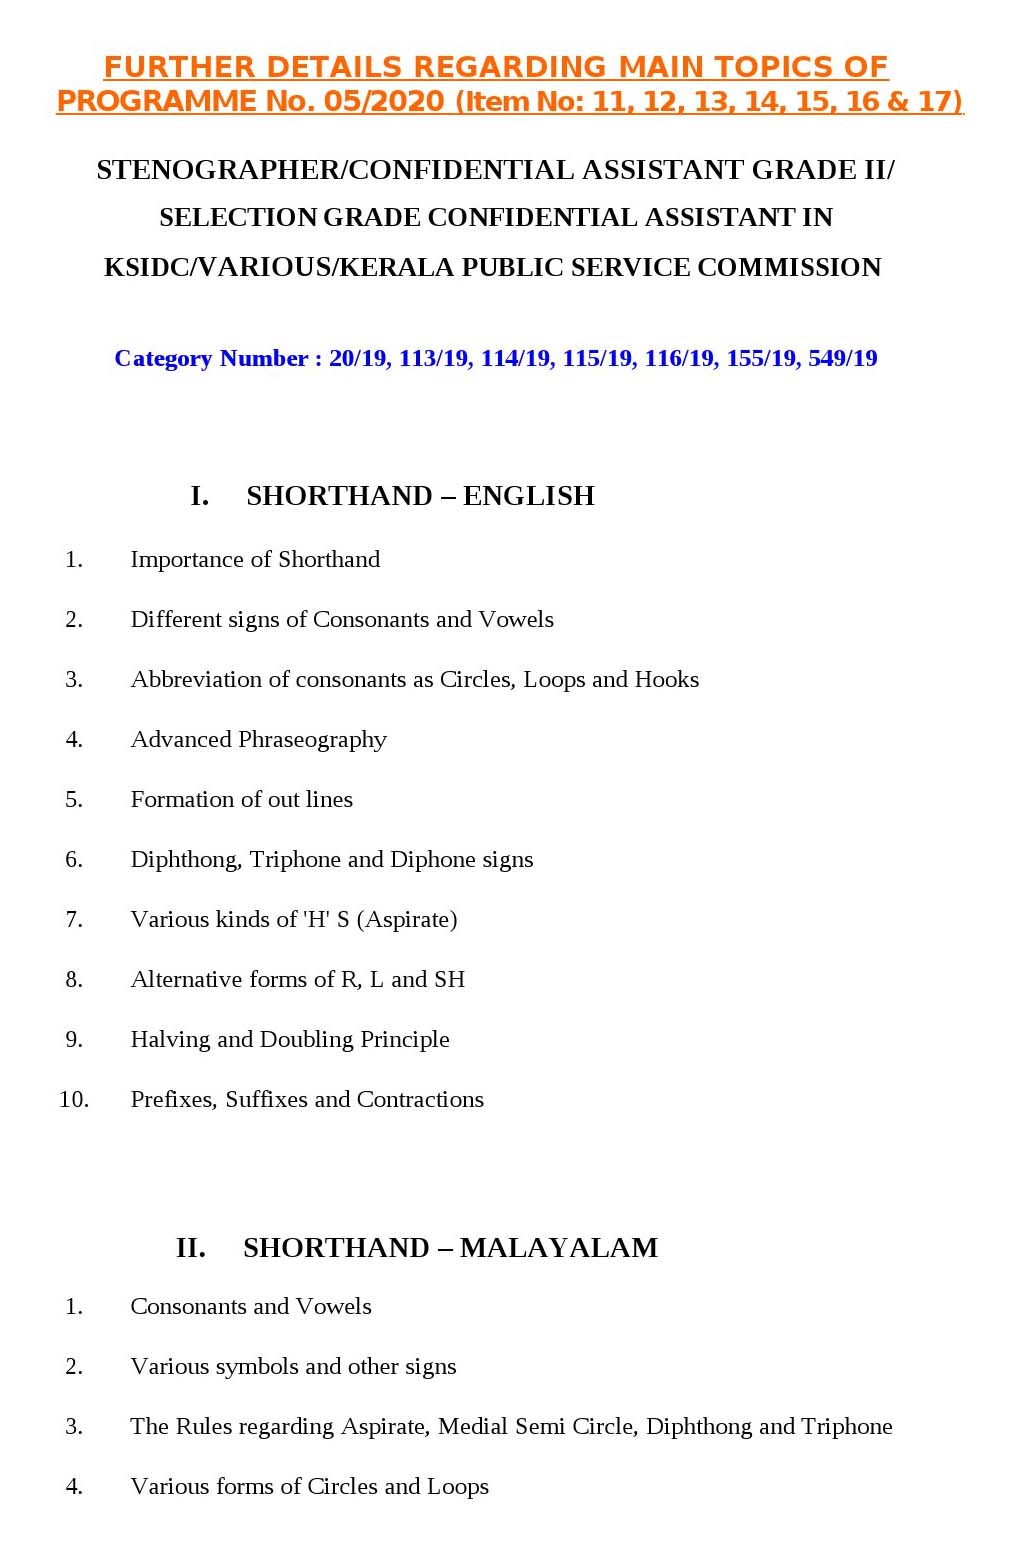 Kerala PSC Stenographer Exam Syllabus May 2020 - Notification Image 1